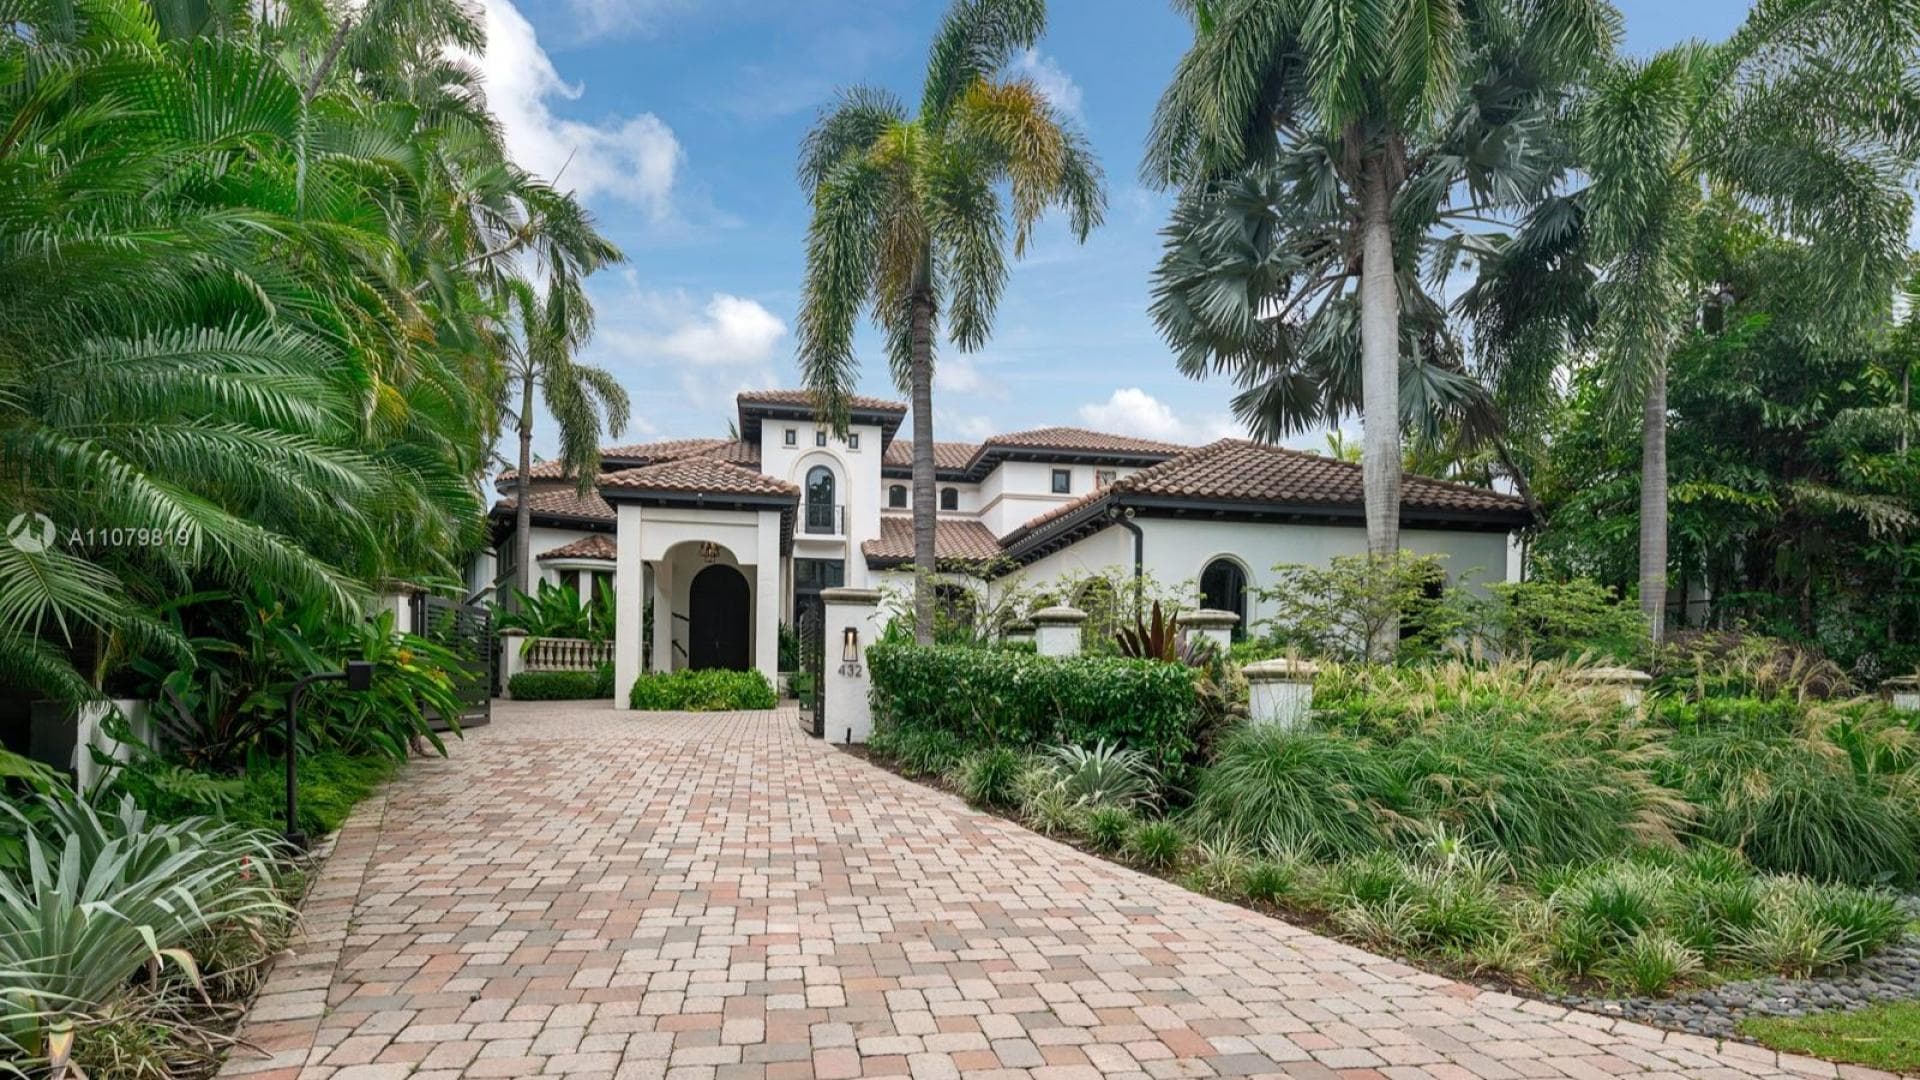 5 Bedroom Villa For Sale Miami Beach Lp09754 305581b155073c00.jpg